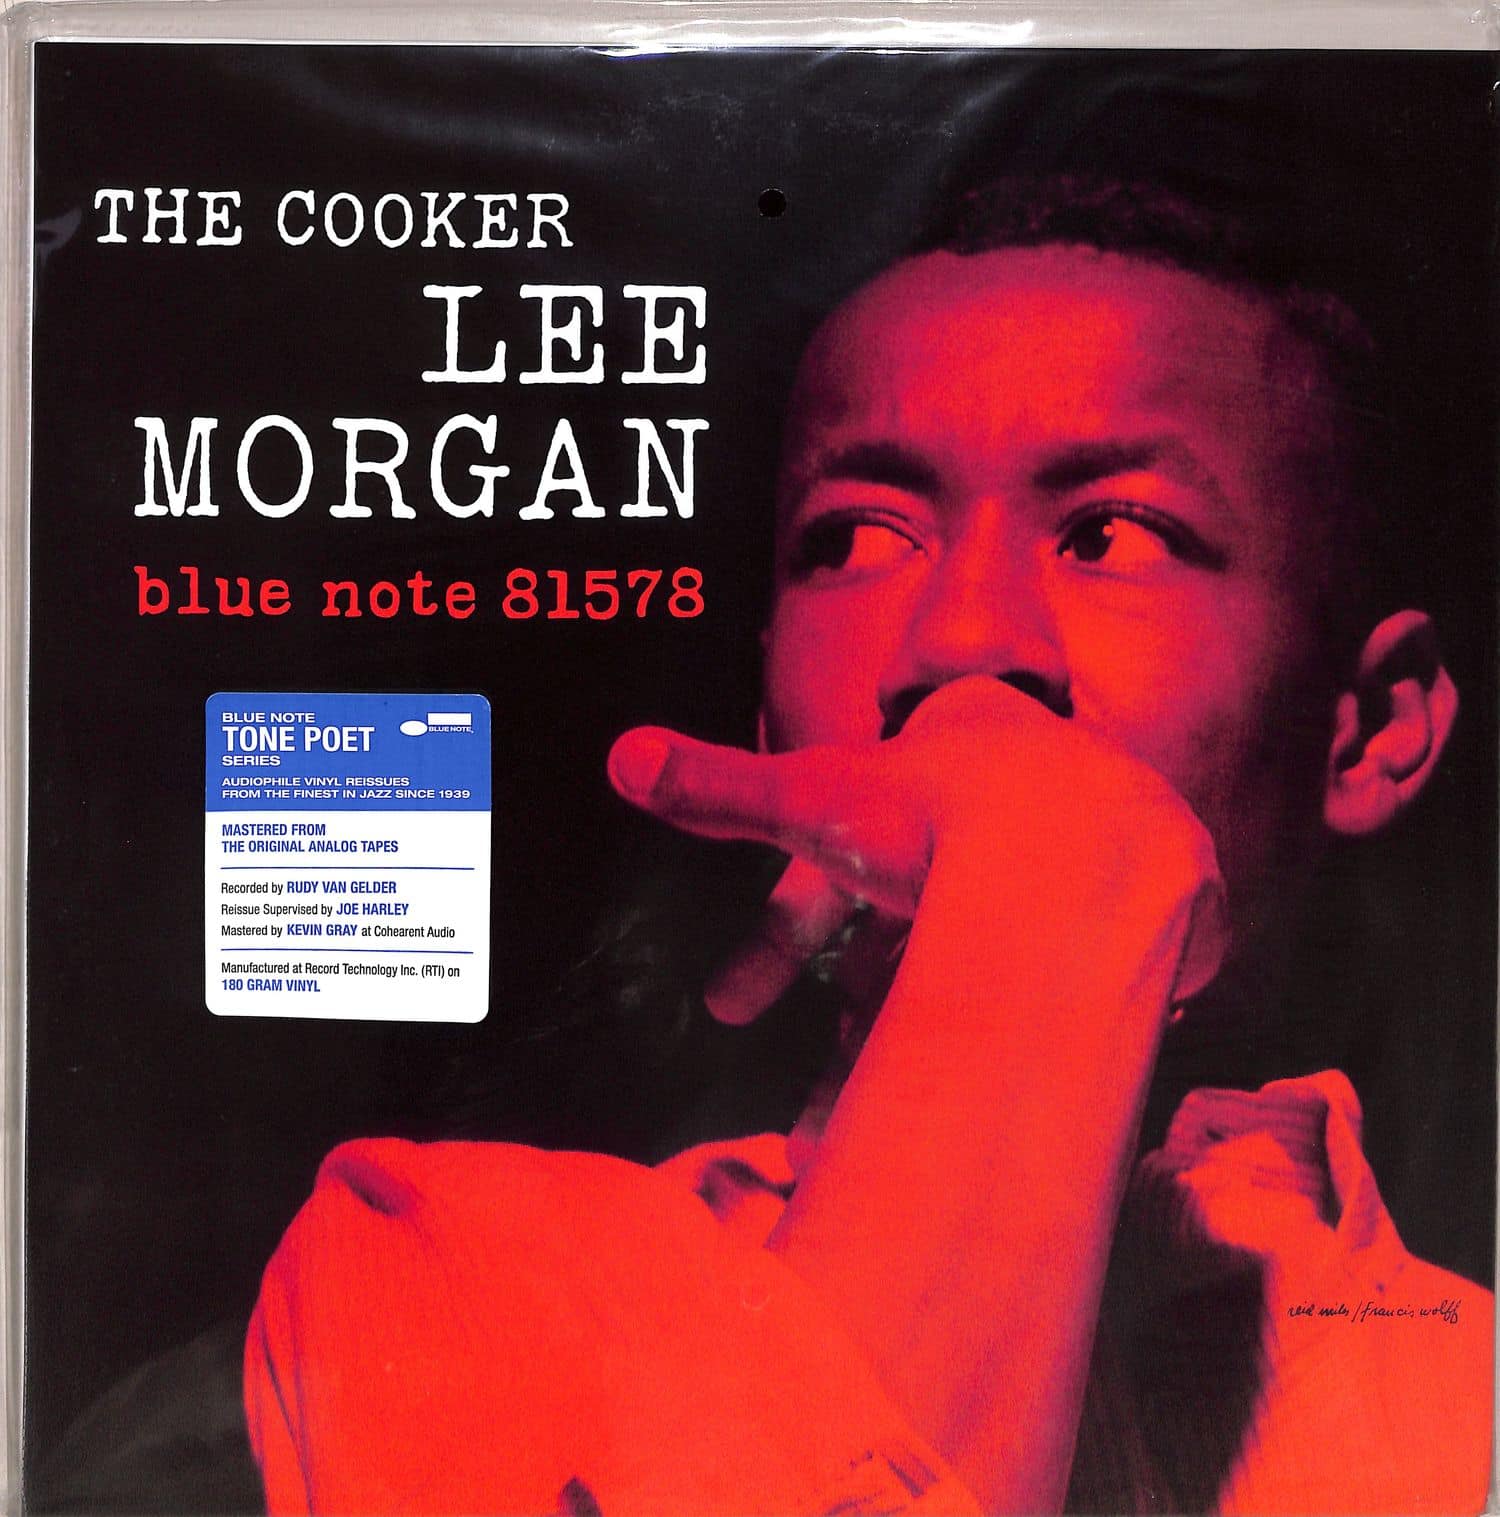 Lee Morgan - THE COOKER 